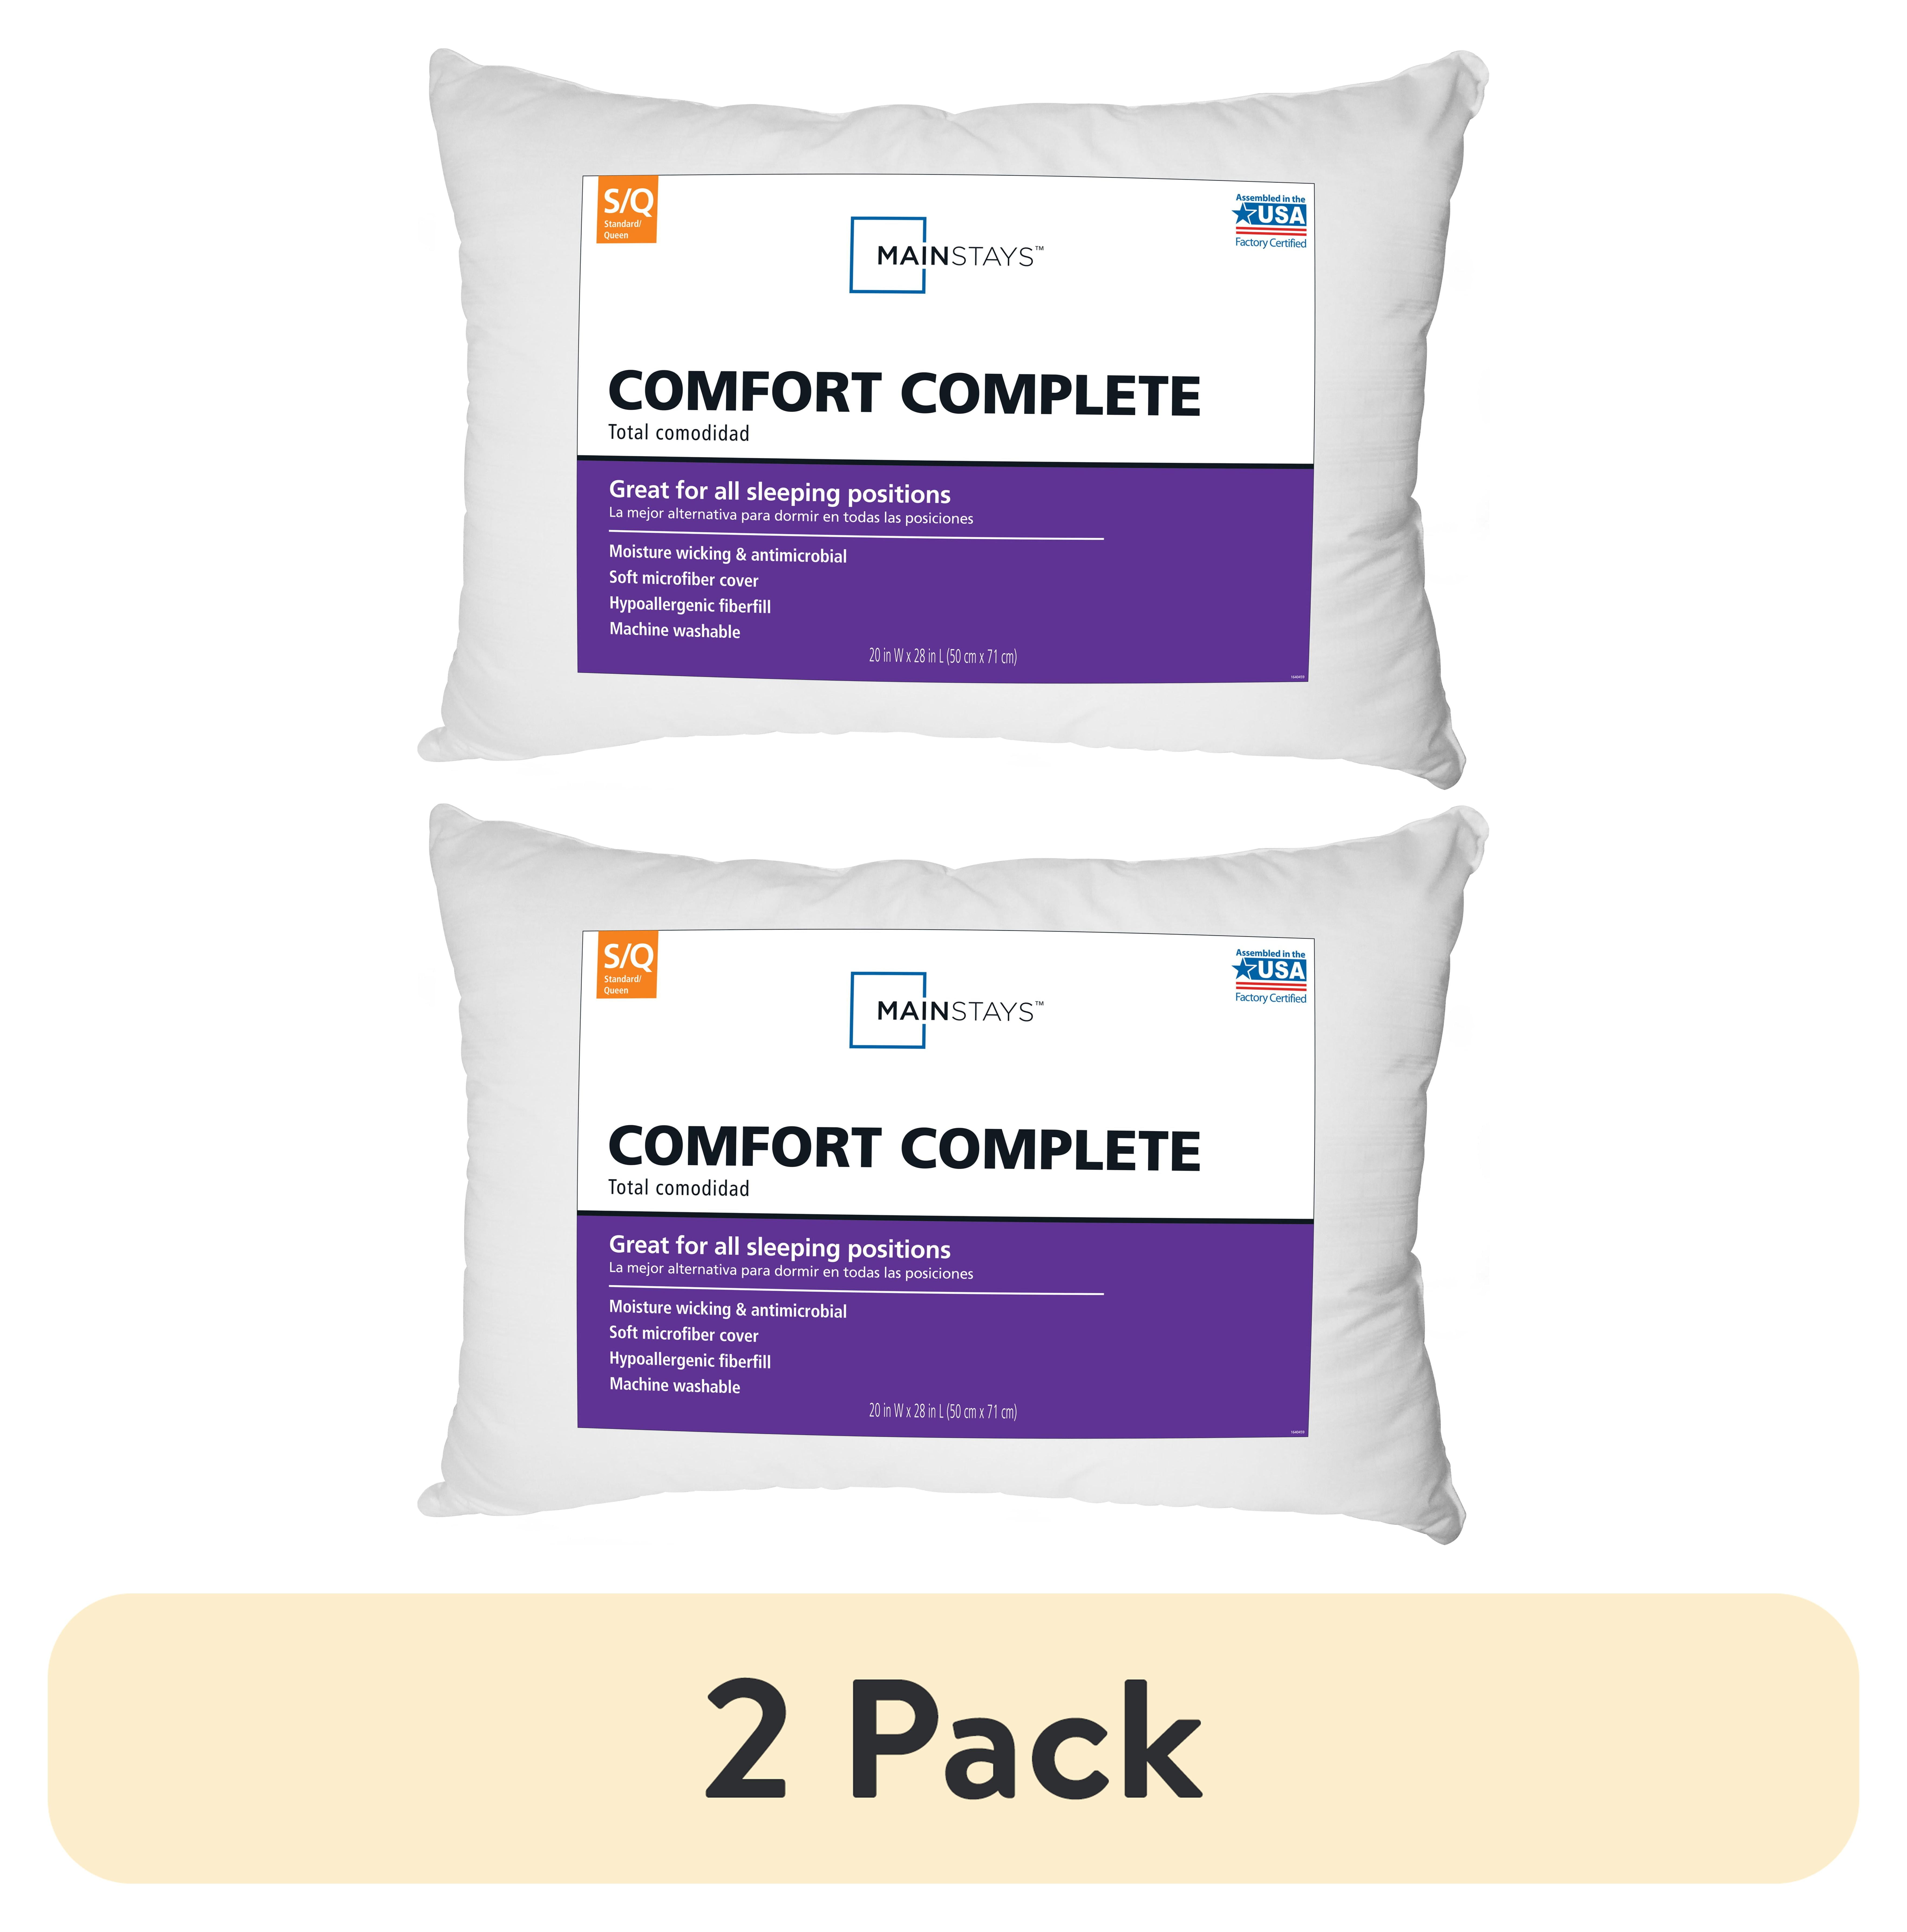 2 pack) Mainstays Comfort Complete Bed Pillow, Standard/Queen 